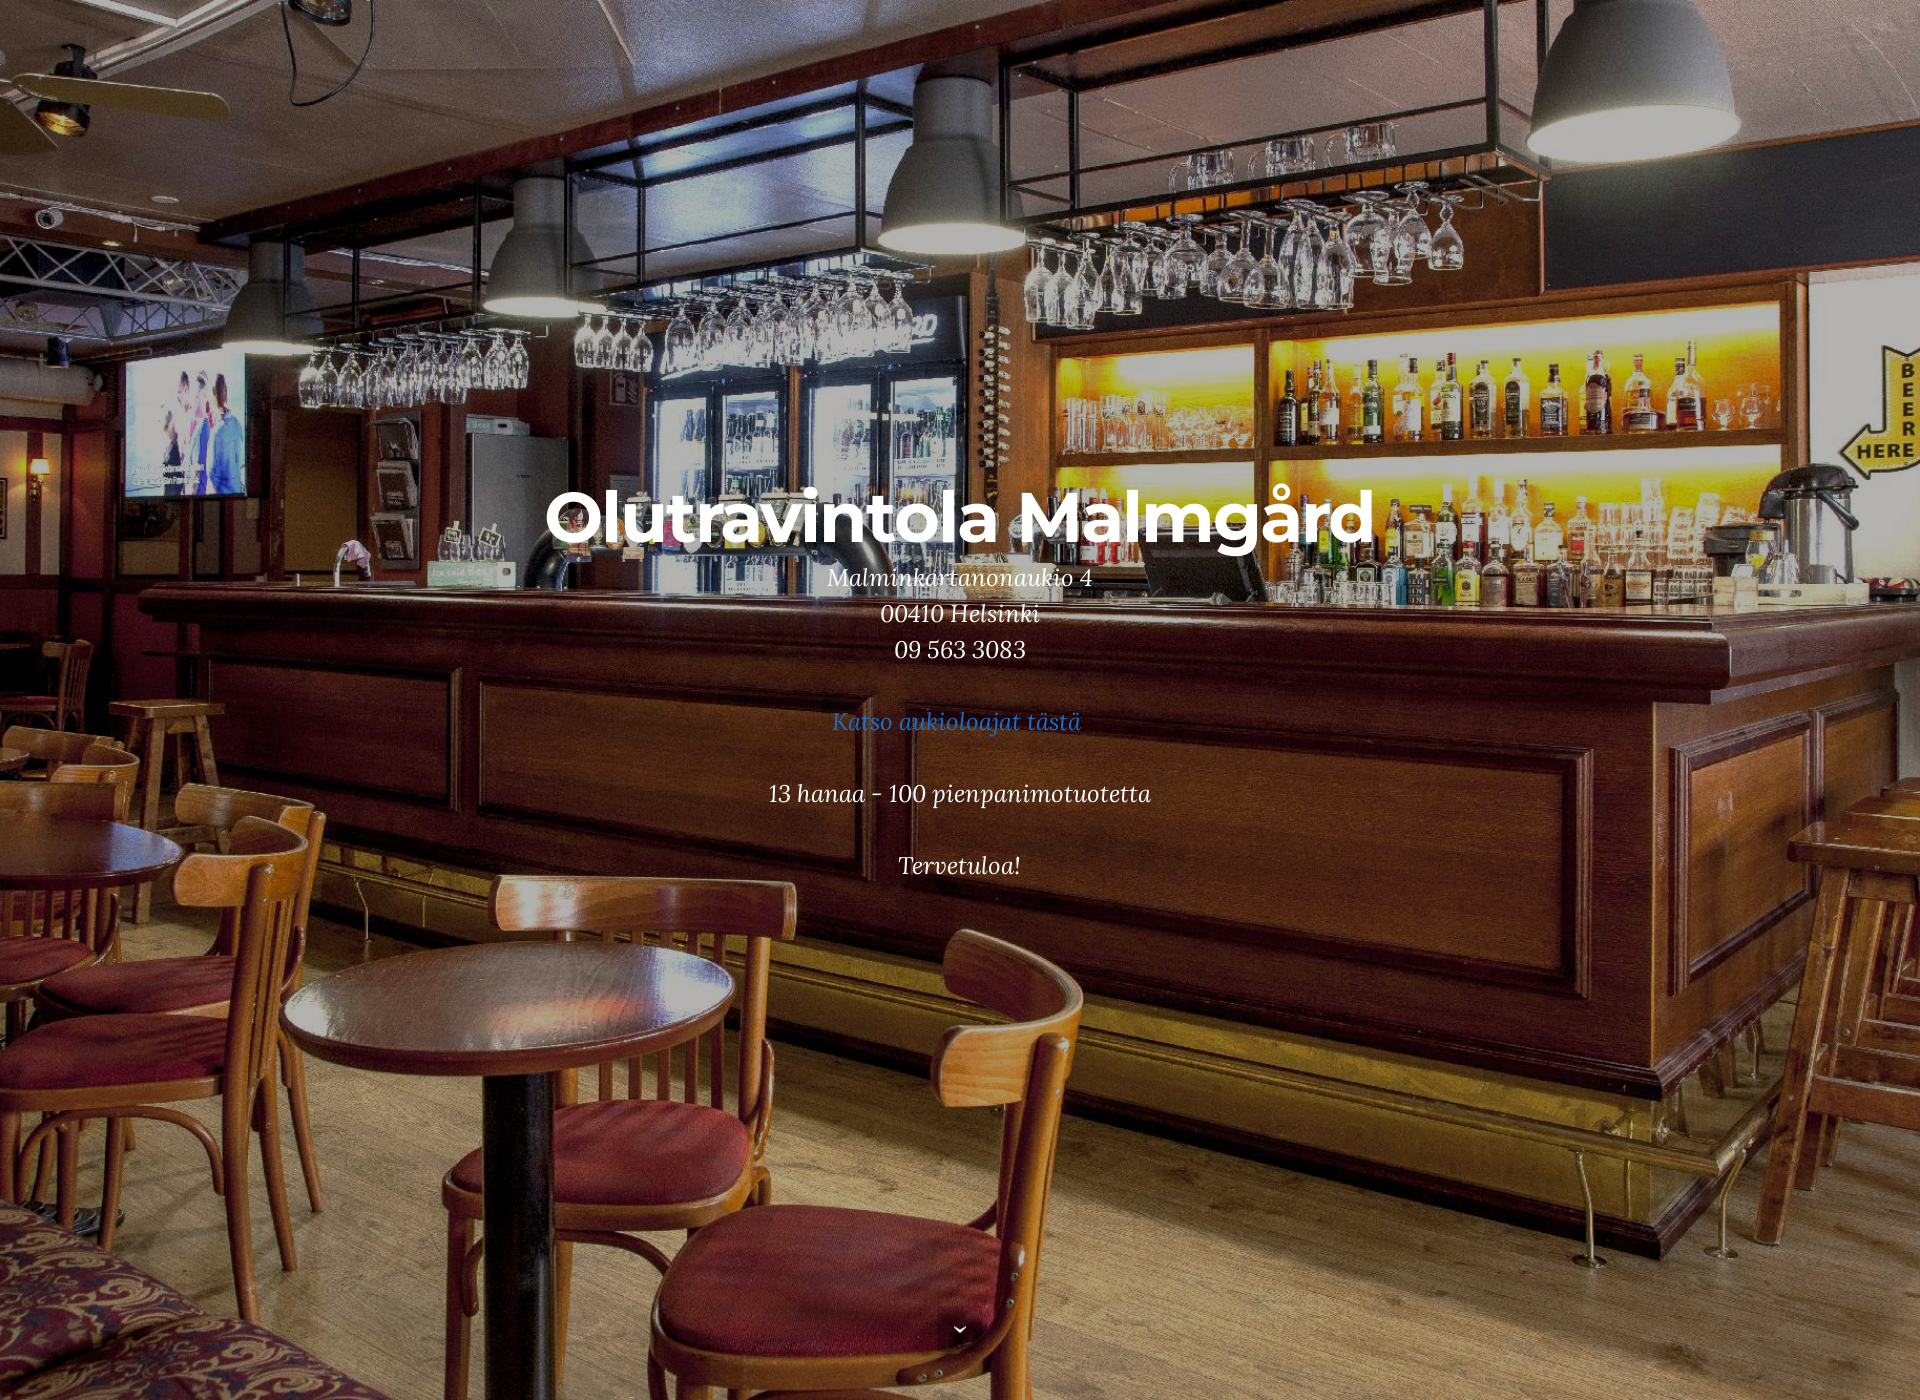 Näyttökuva olutravintolamalmgard.fi